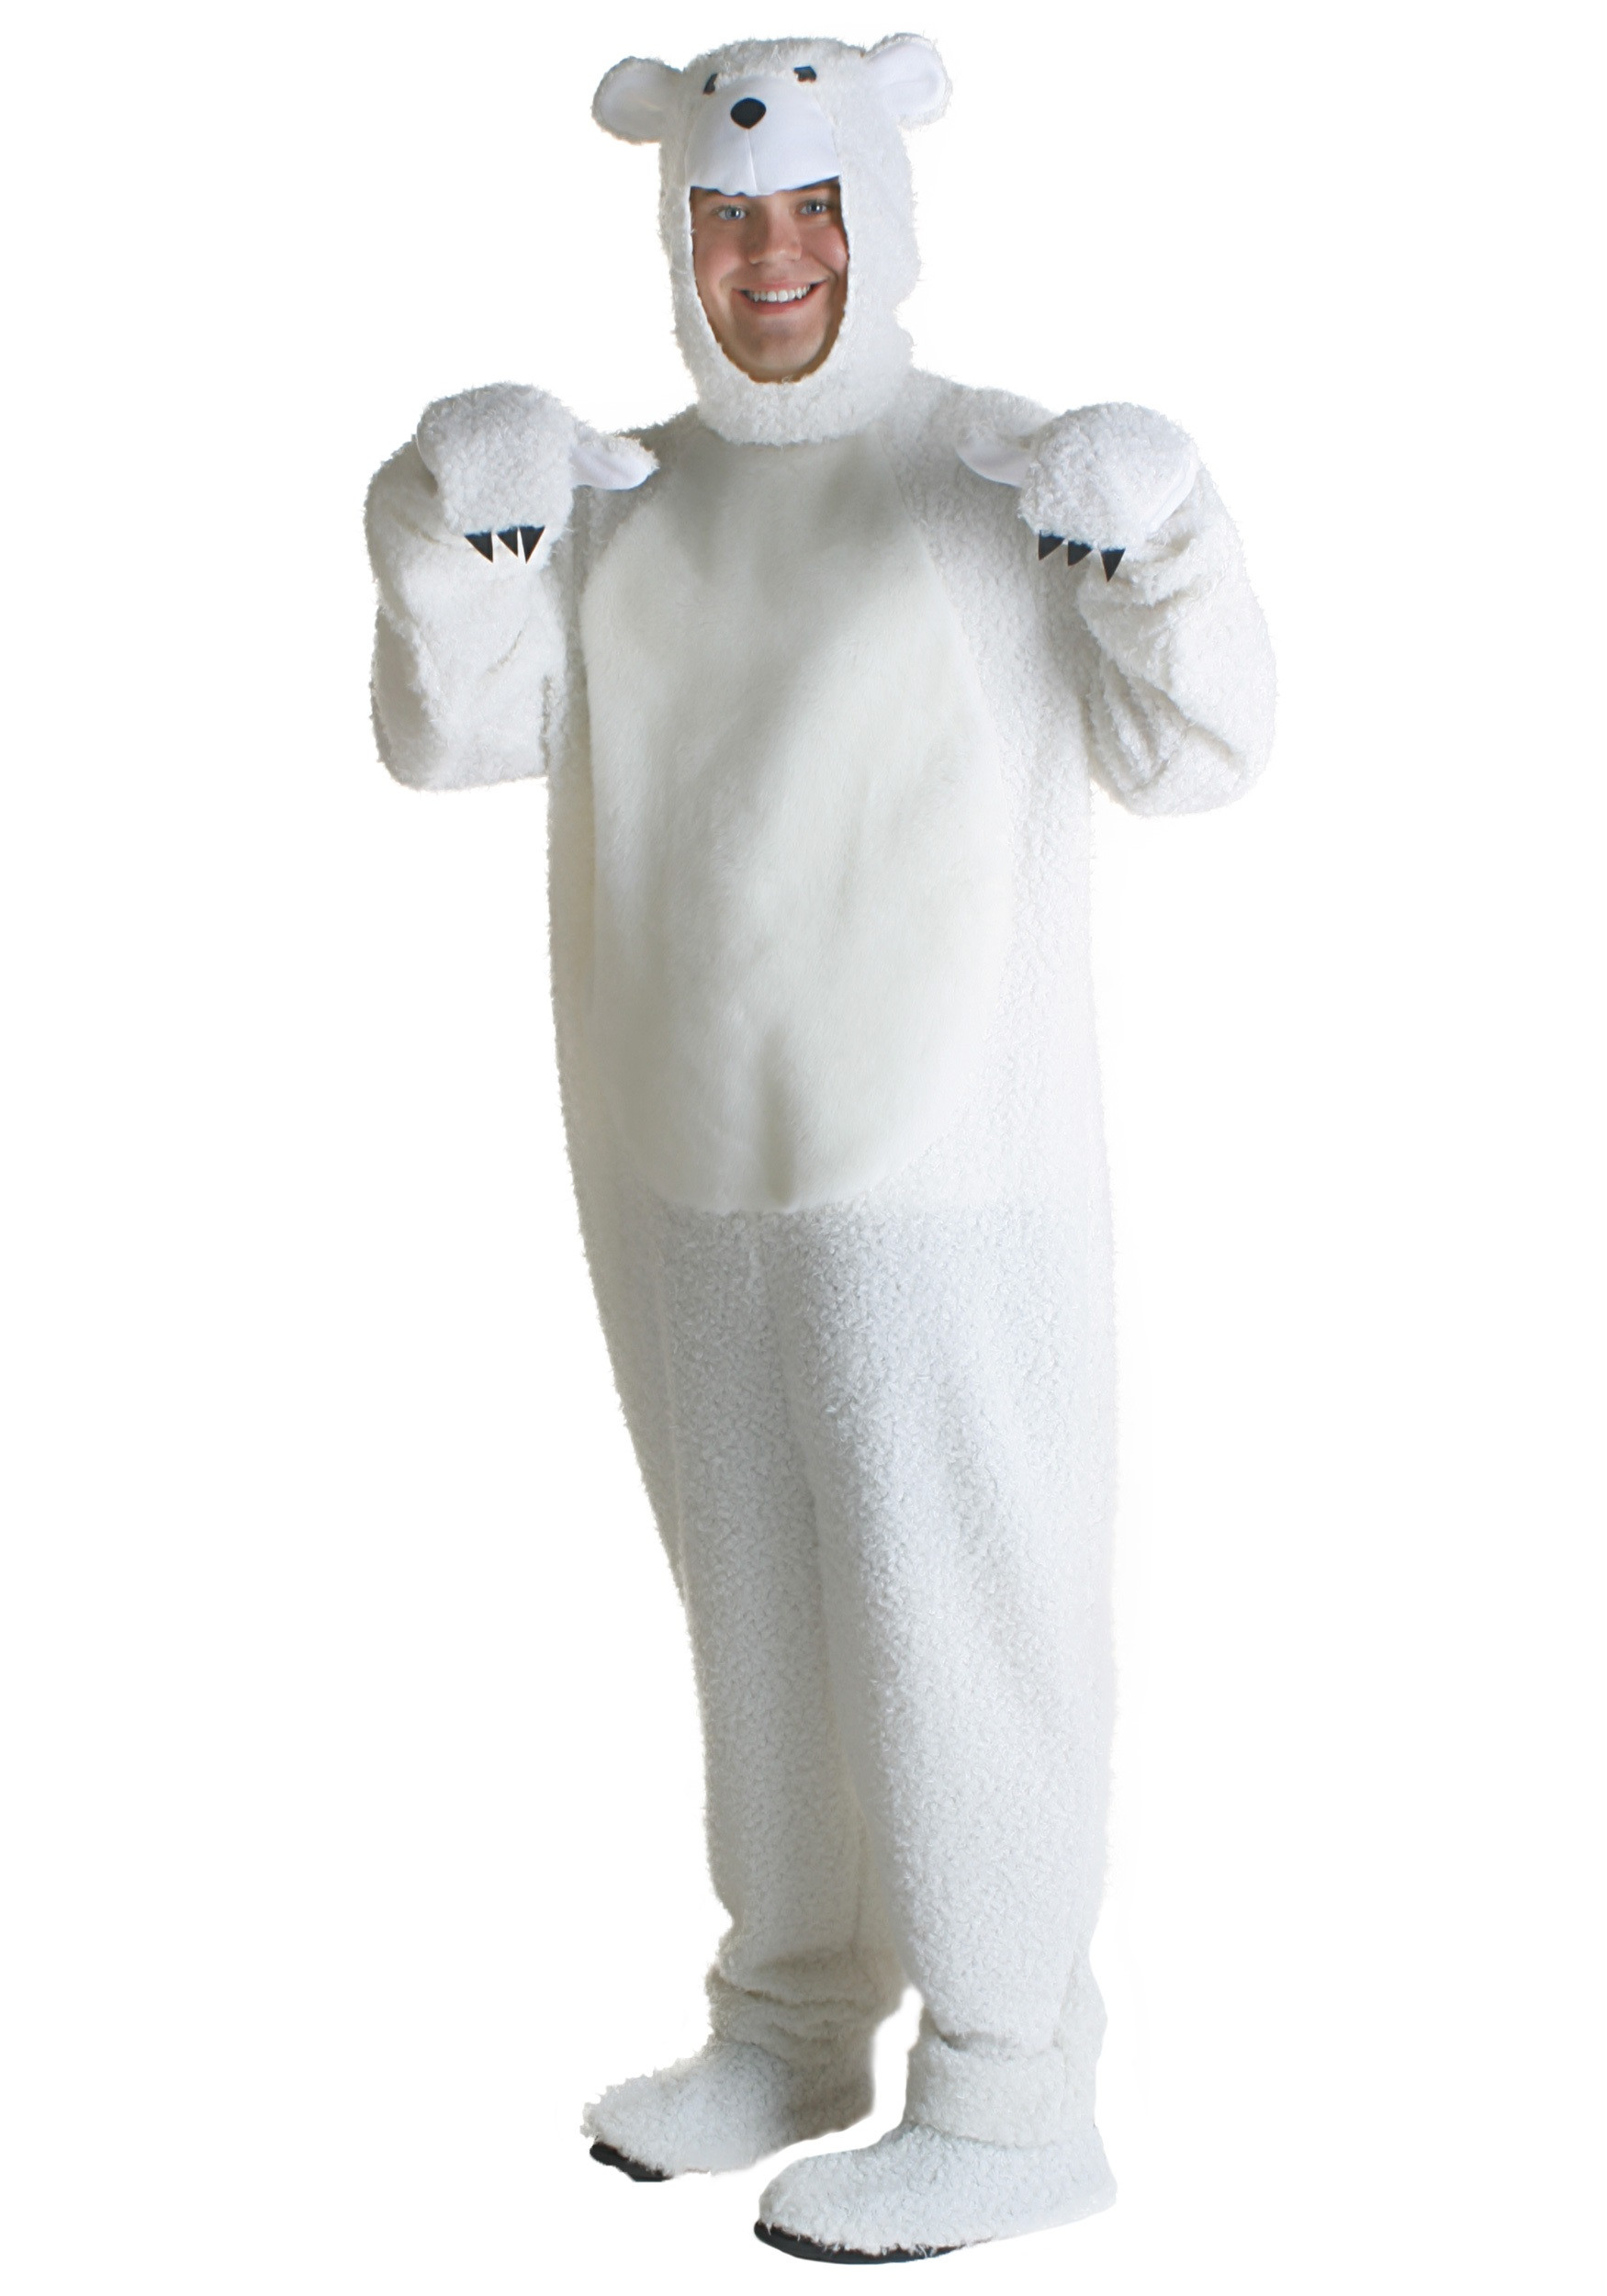 Best ideas about Polar Bear Costume DIY
. Save or Pin Adult Polar Bear Costume Now.